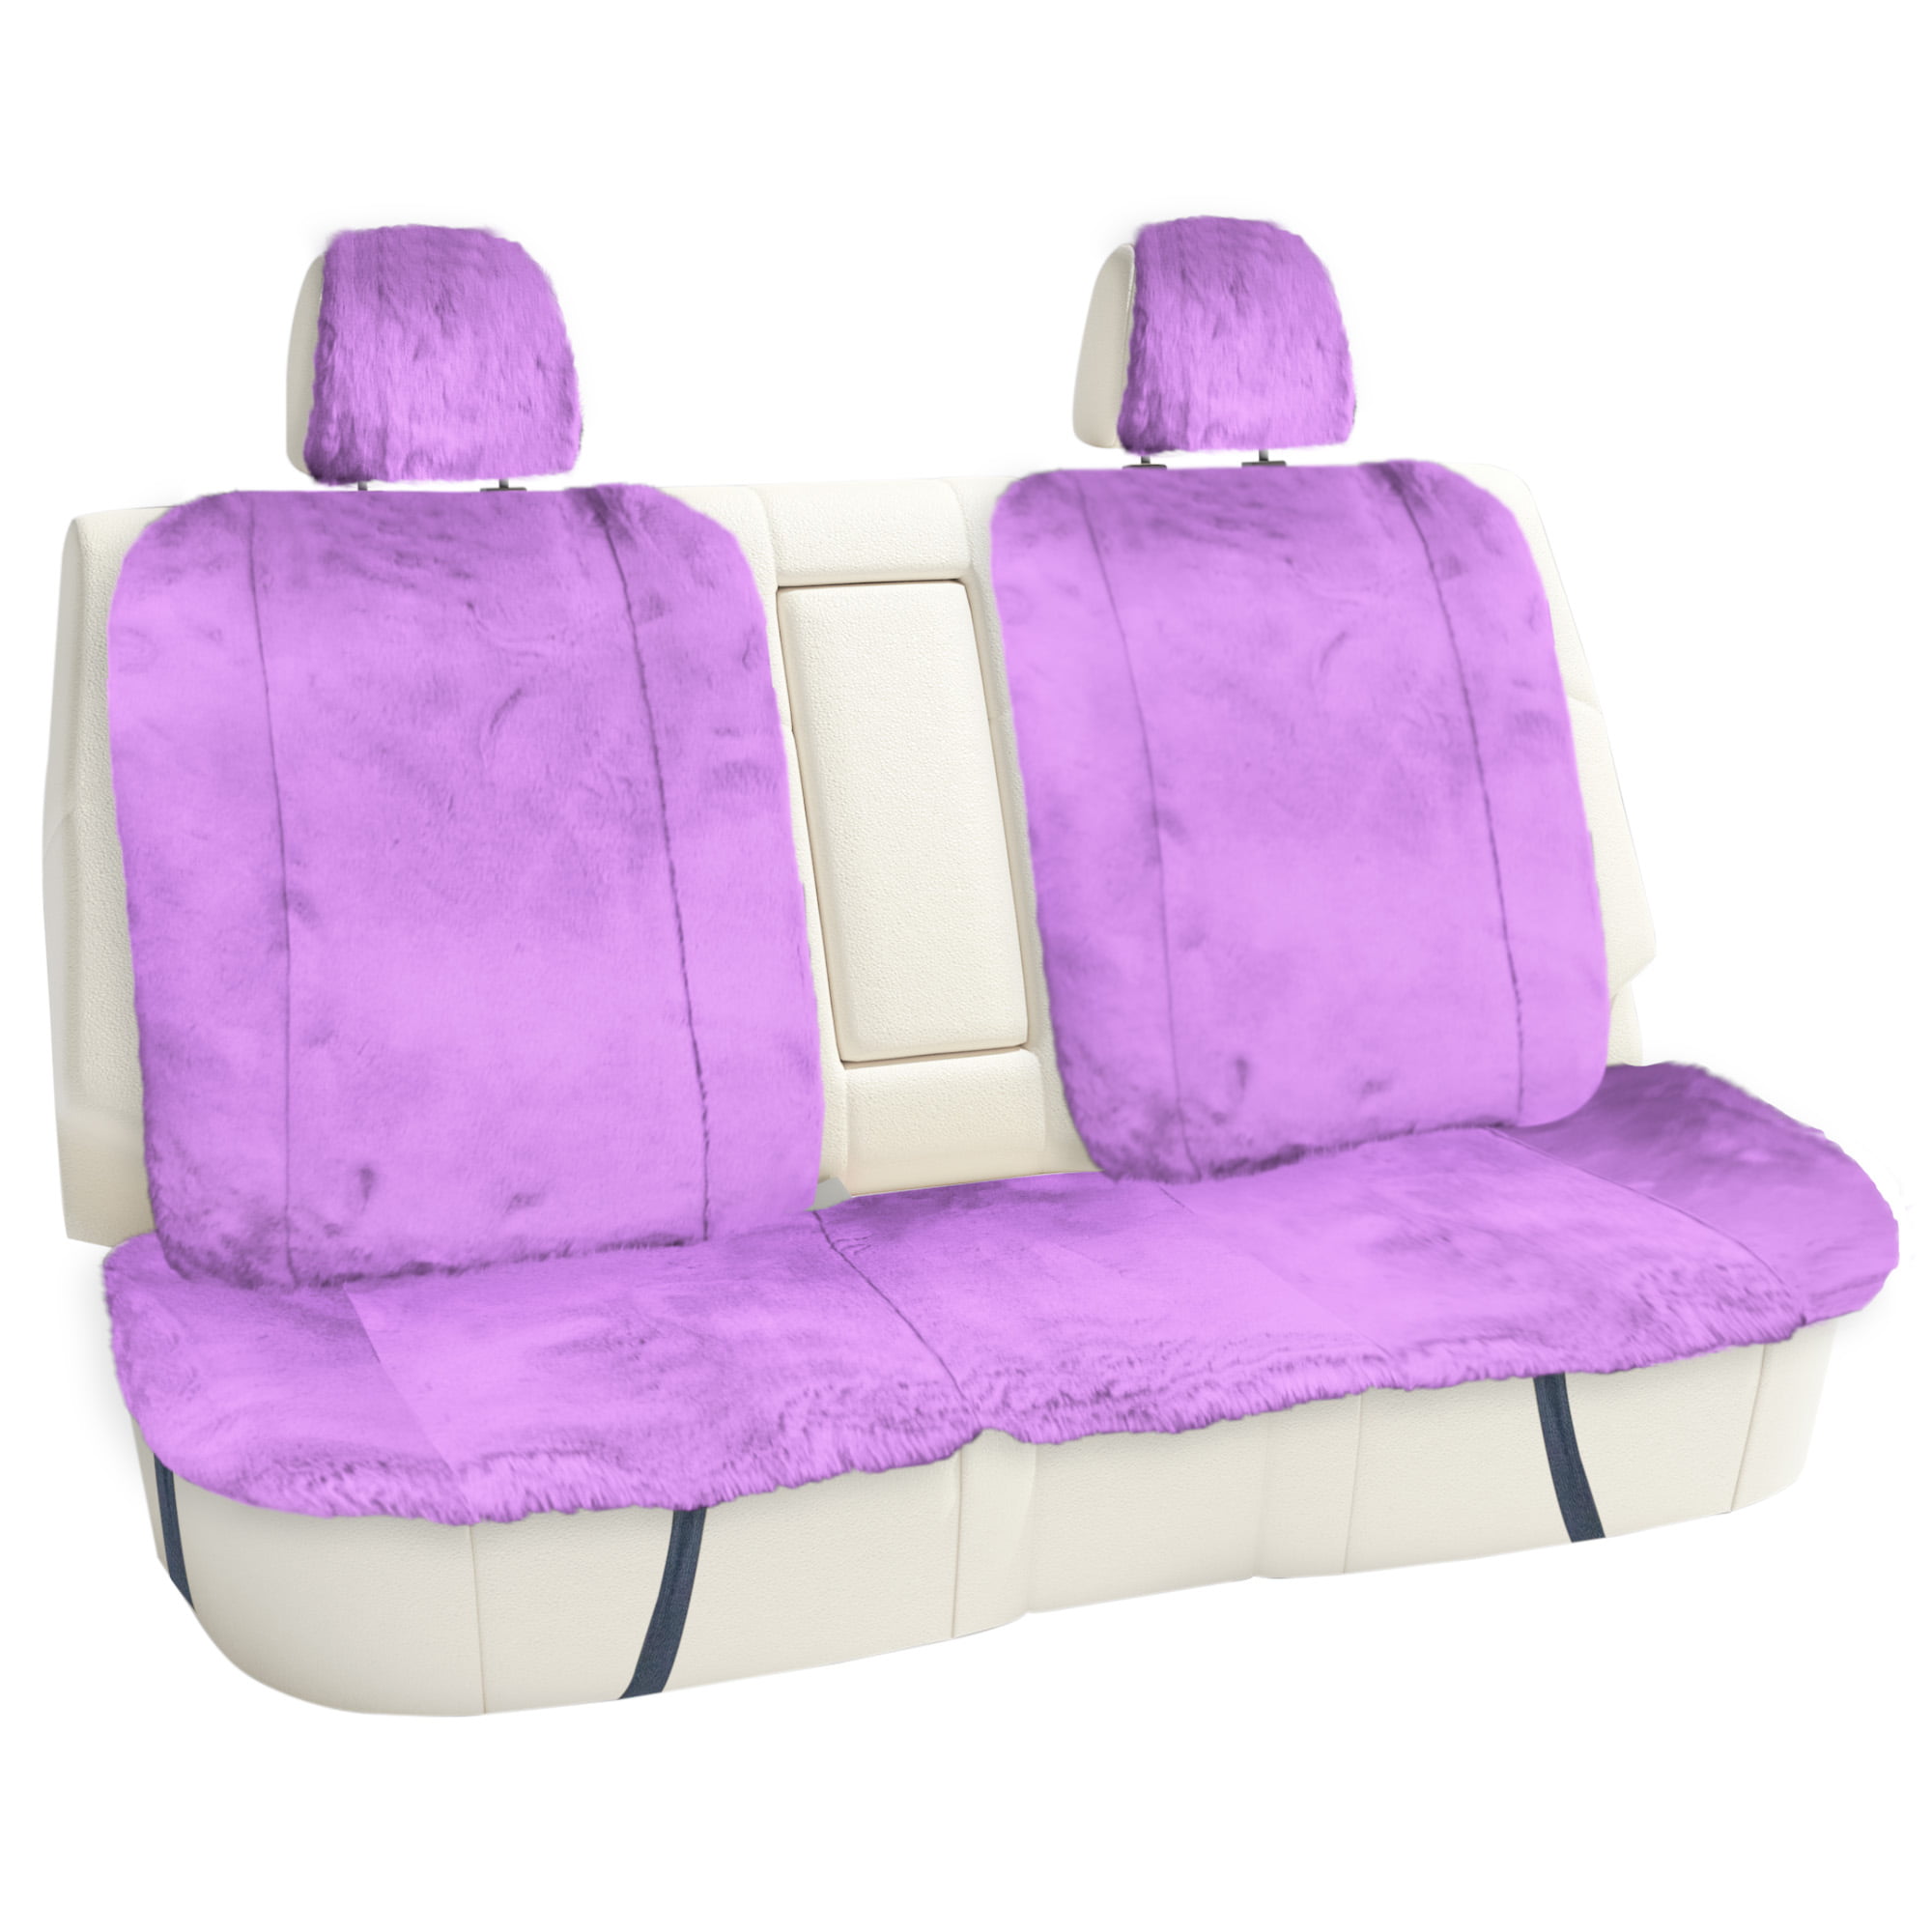 FH Group Memory Foam Seat Cushion - Tailbone Cushion - Cushion for Car, Work, and Home, Size: Universal, Purple